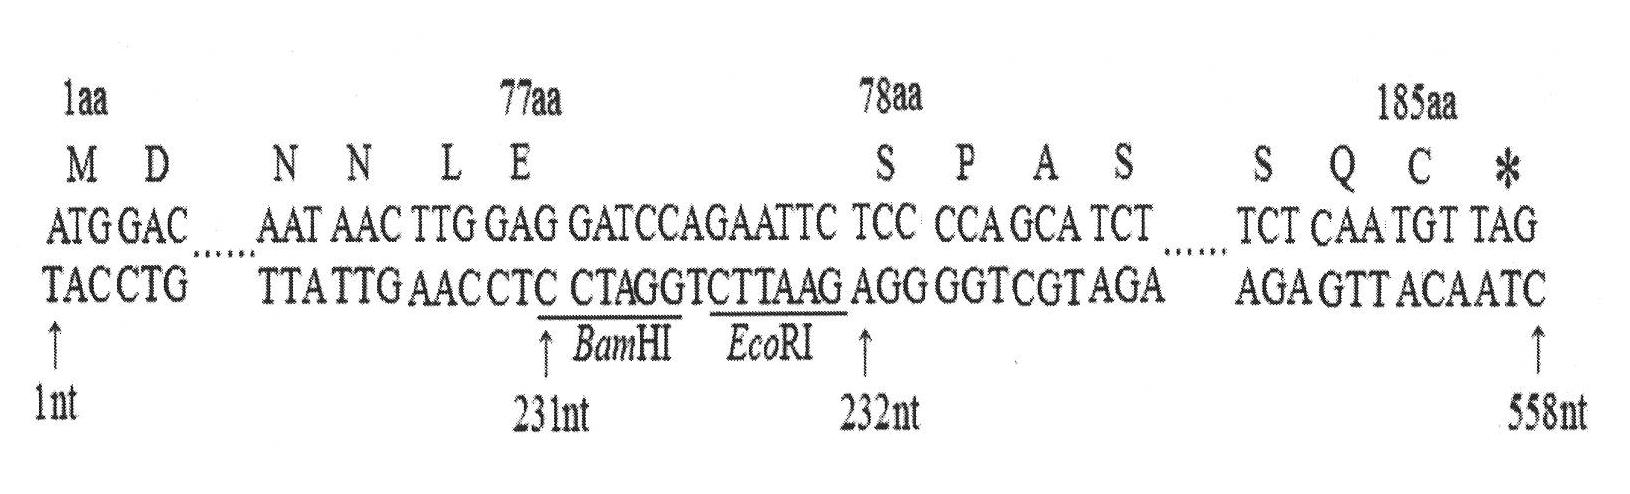 Molecular design of IBDV (Infectious Bursal Disease Virus) antigen epitope and HBcAg (Hepatitis B Core Antigen) chimeric gene